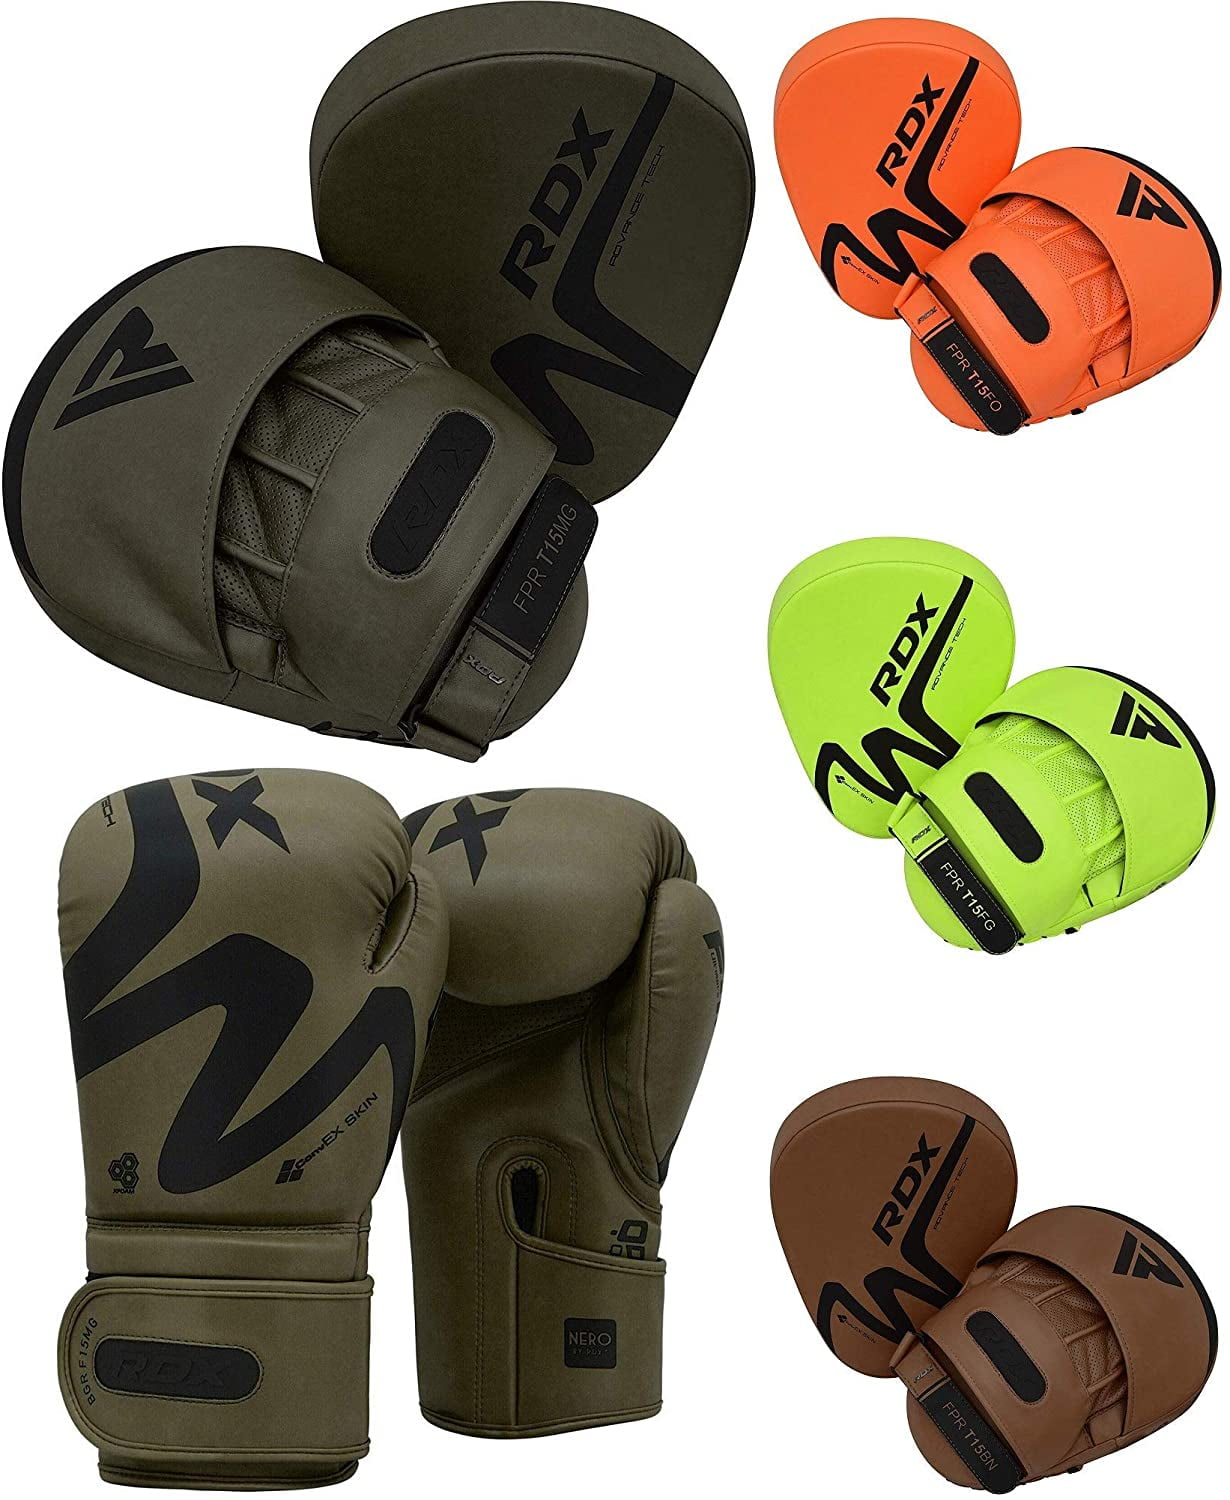 Focus pads and Boxing Gloves set Hook & Jab Punching kick Boxing Mitt MMA Fight 